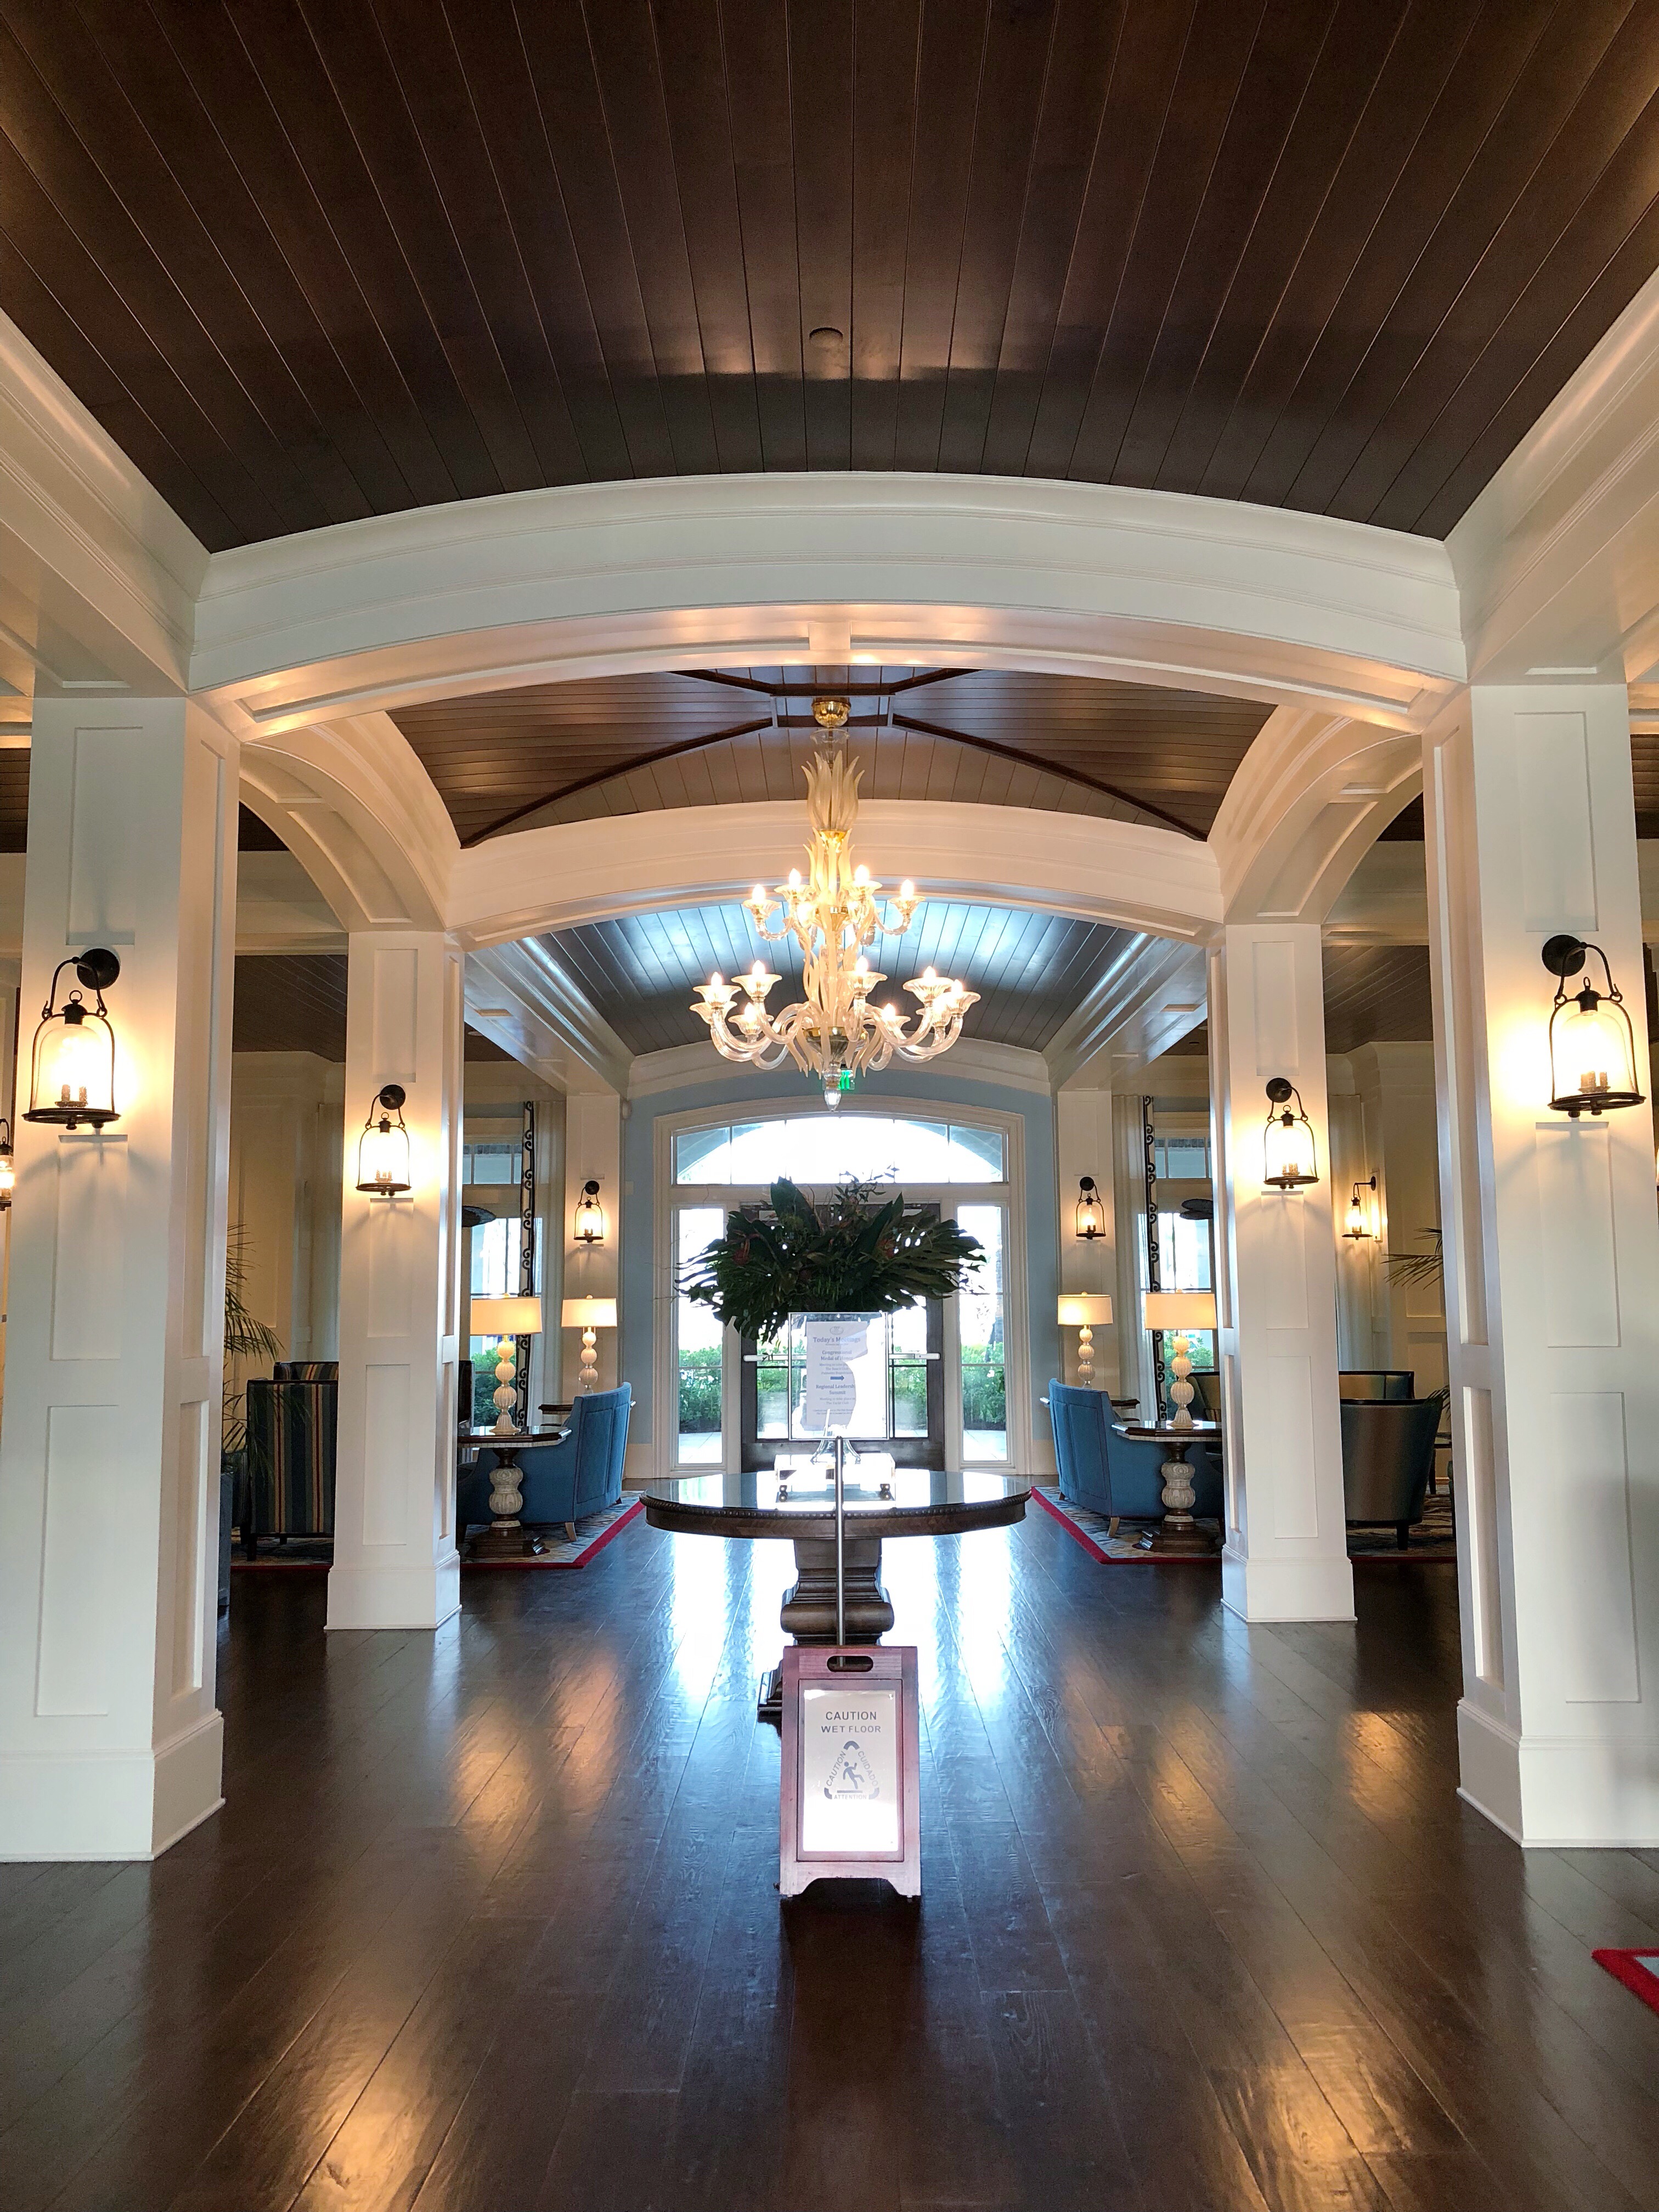 Hotel Review: The Beach Club at Charleston Harbor Resort & Marina